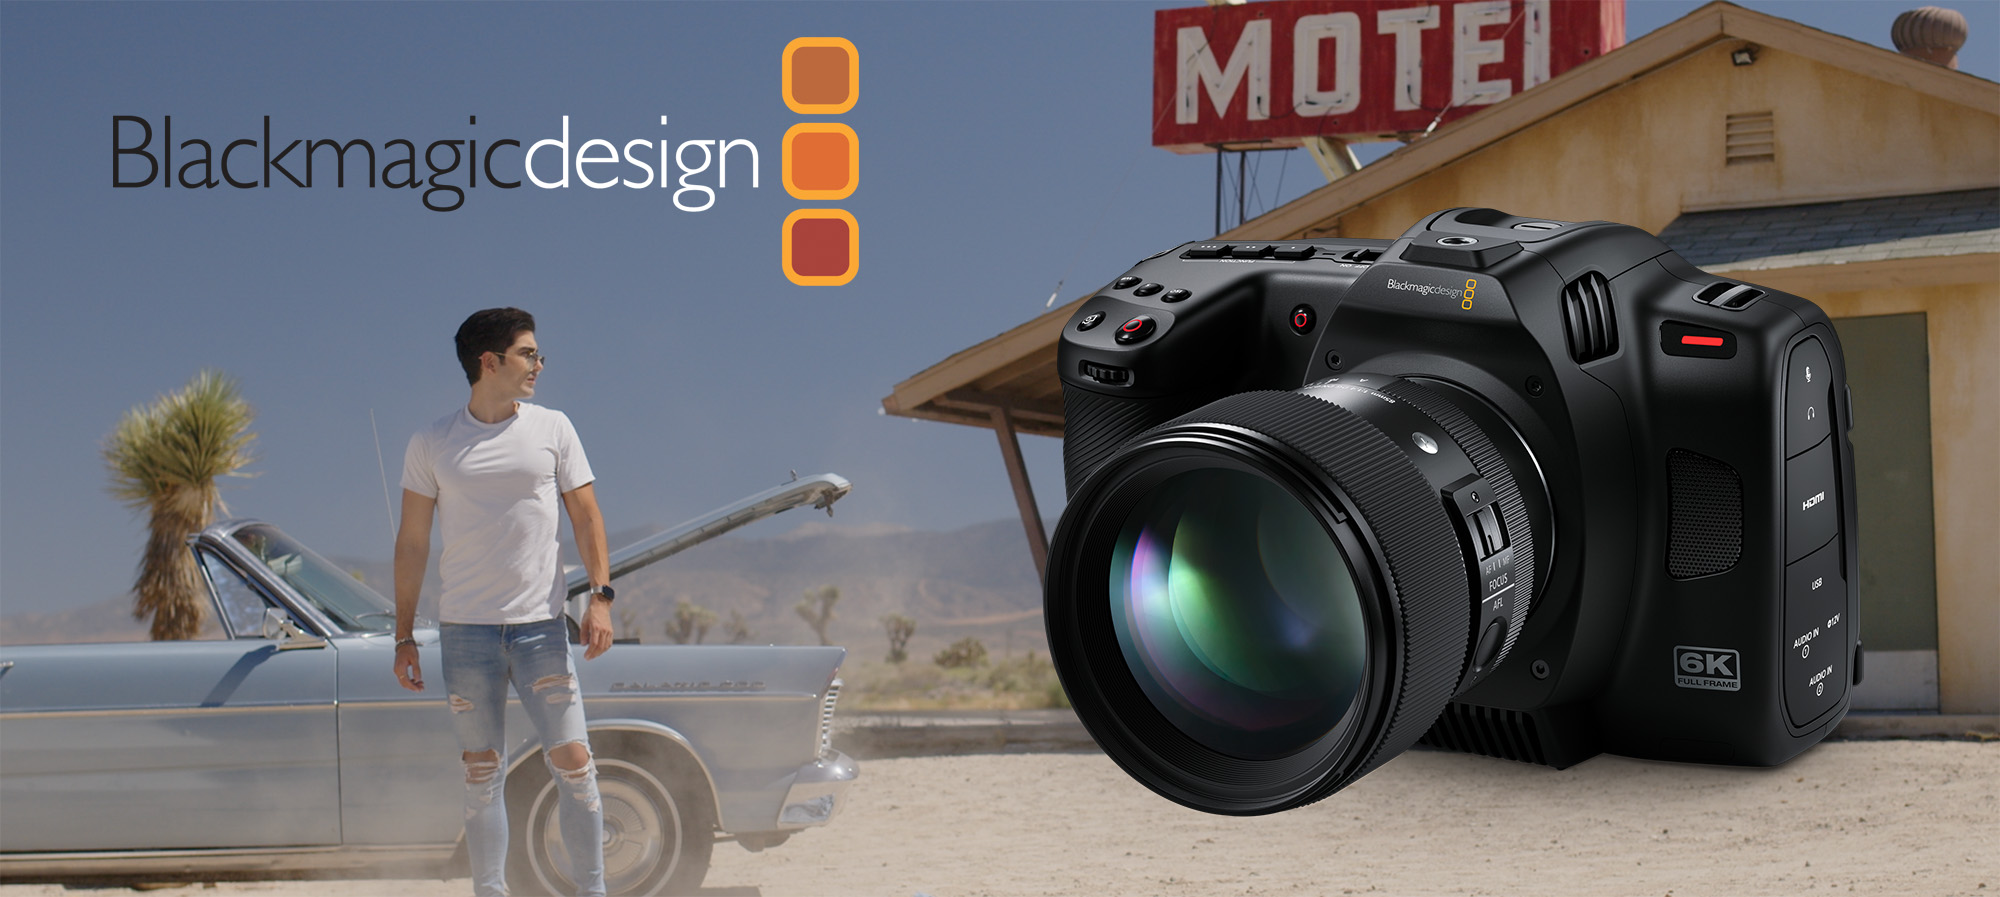 Review: Blackmagic Cinema Camera 6K – Blackmagic Design Expands Its Cinema Camera Lineup